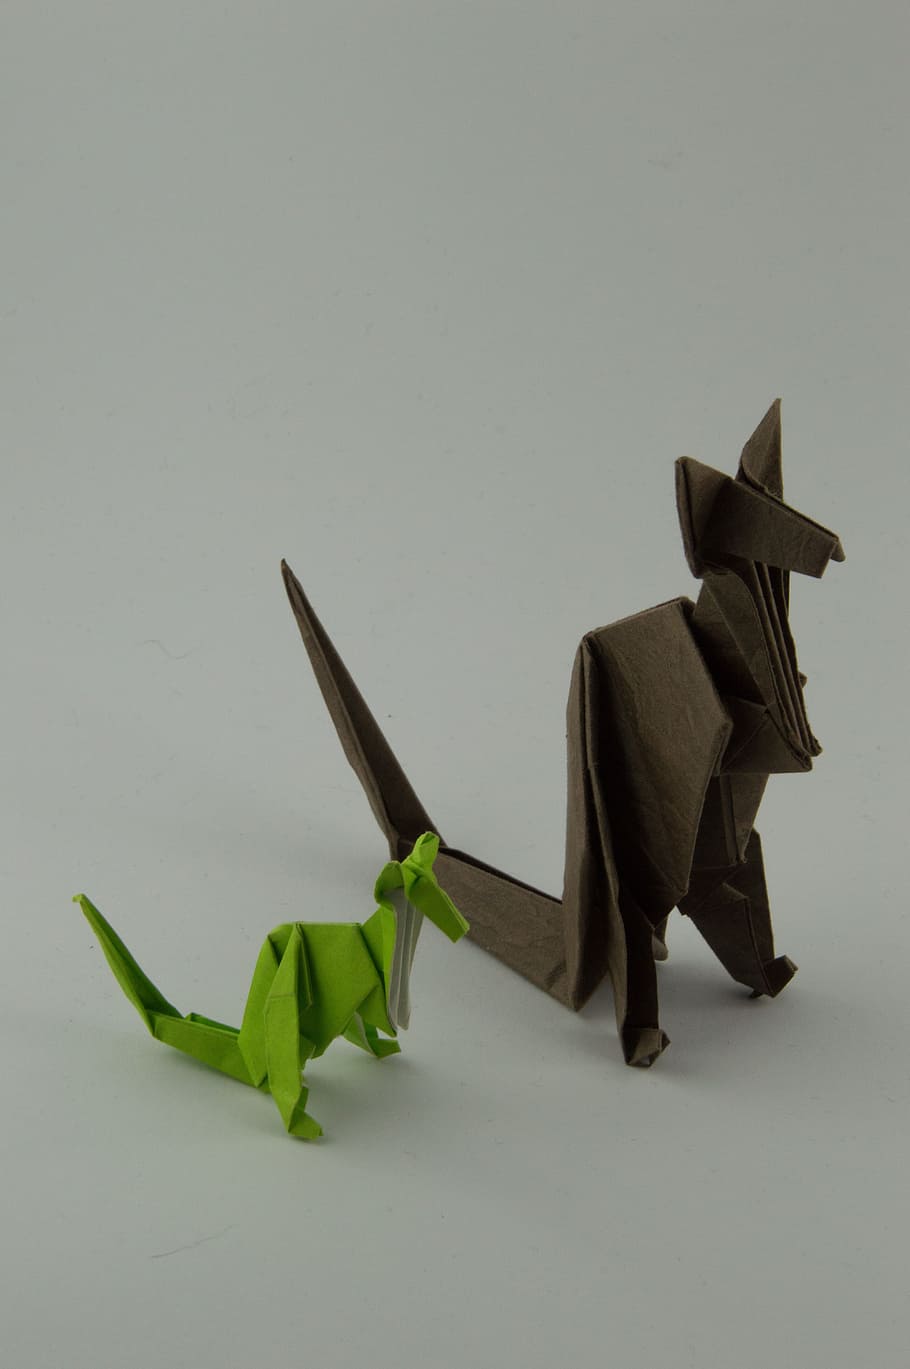 objek fotografi, still, Object, Still Photography, kanguru, origami, seni, lipat, tekstur kertas, kertas